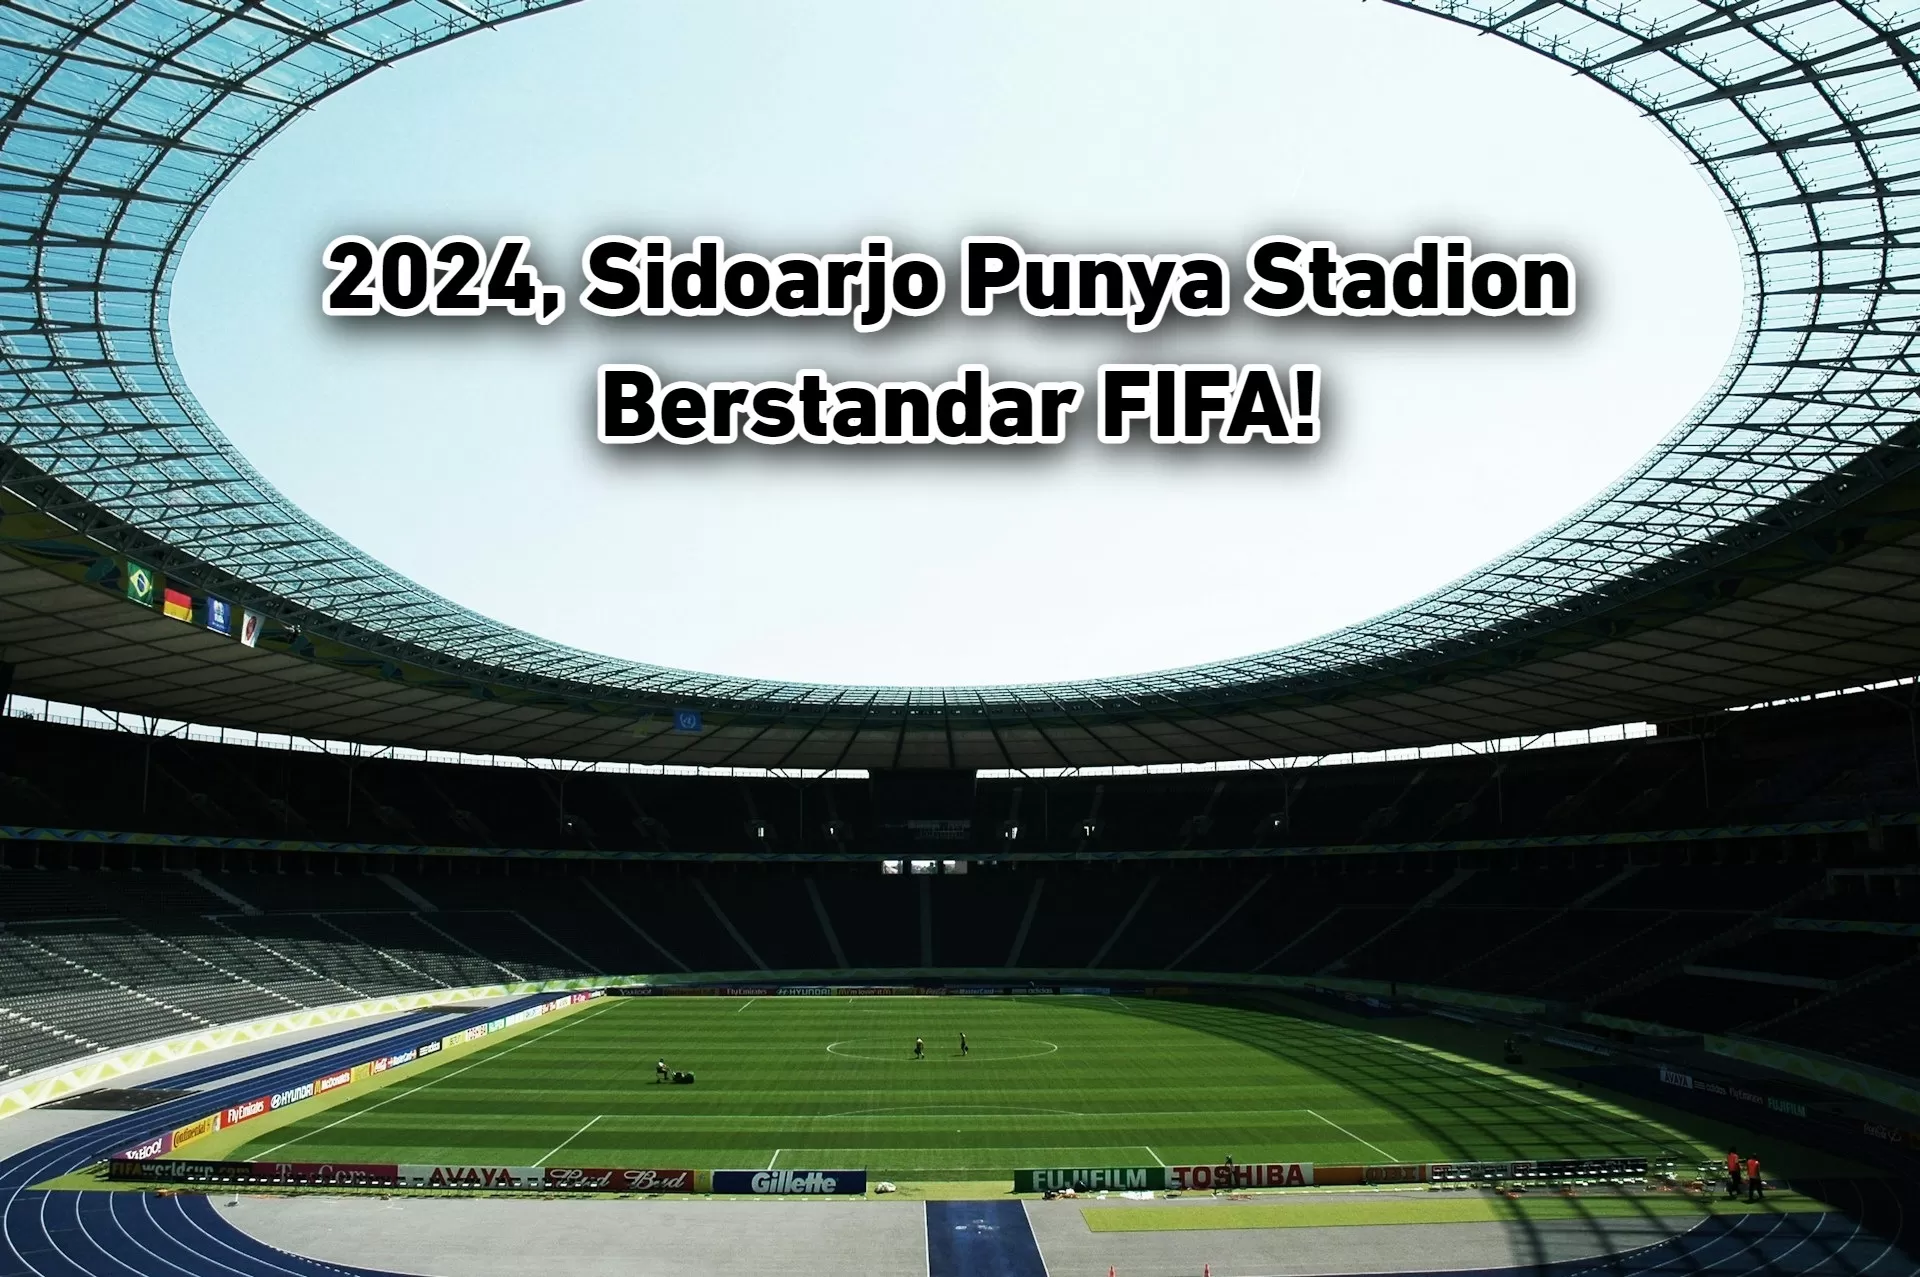 Rampung 2024! Stadion Kebanggaan Warga Sidoarjo Ini Segera Disulap Jadi Stadion Berstandar FIFA Senilai Rp110 M